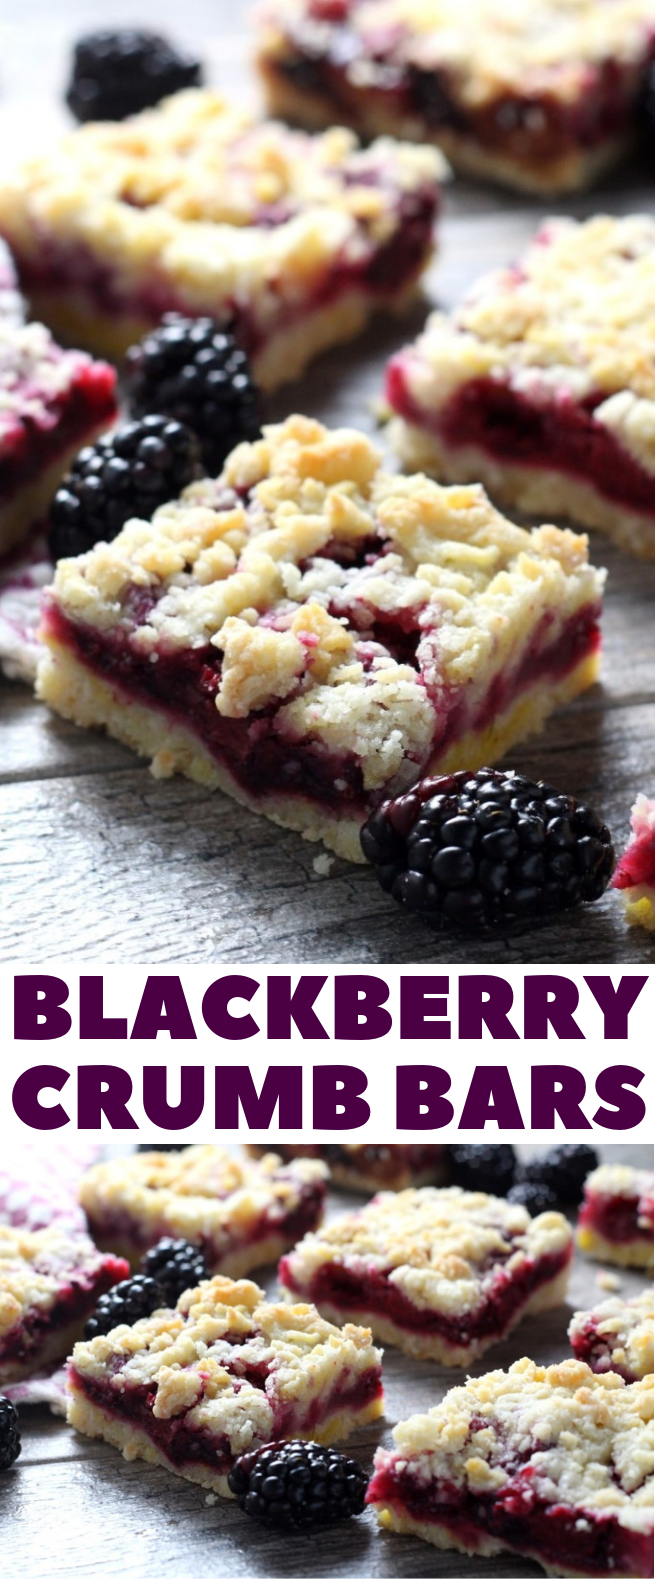 Blackberry Crumb Bars #Dessert #Snack